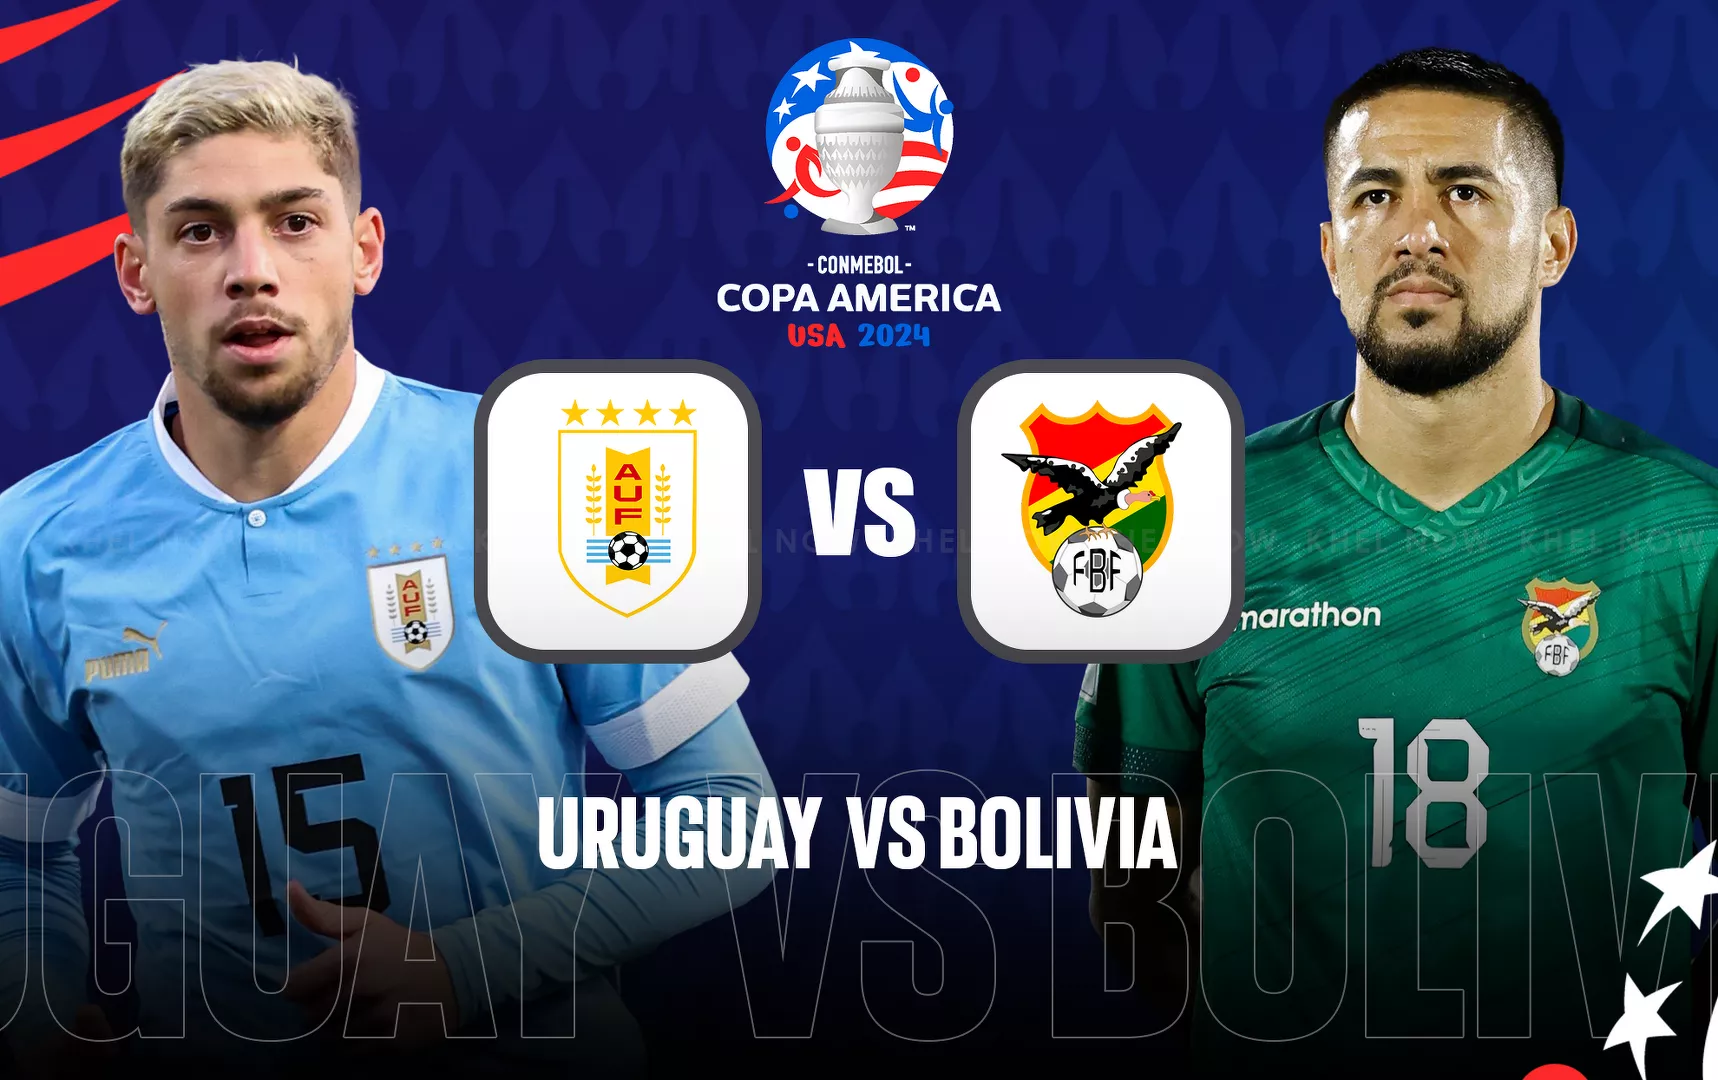 Uruguay vs Bolivia Live streaming, TV channel, kickoff time & where